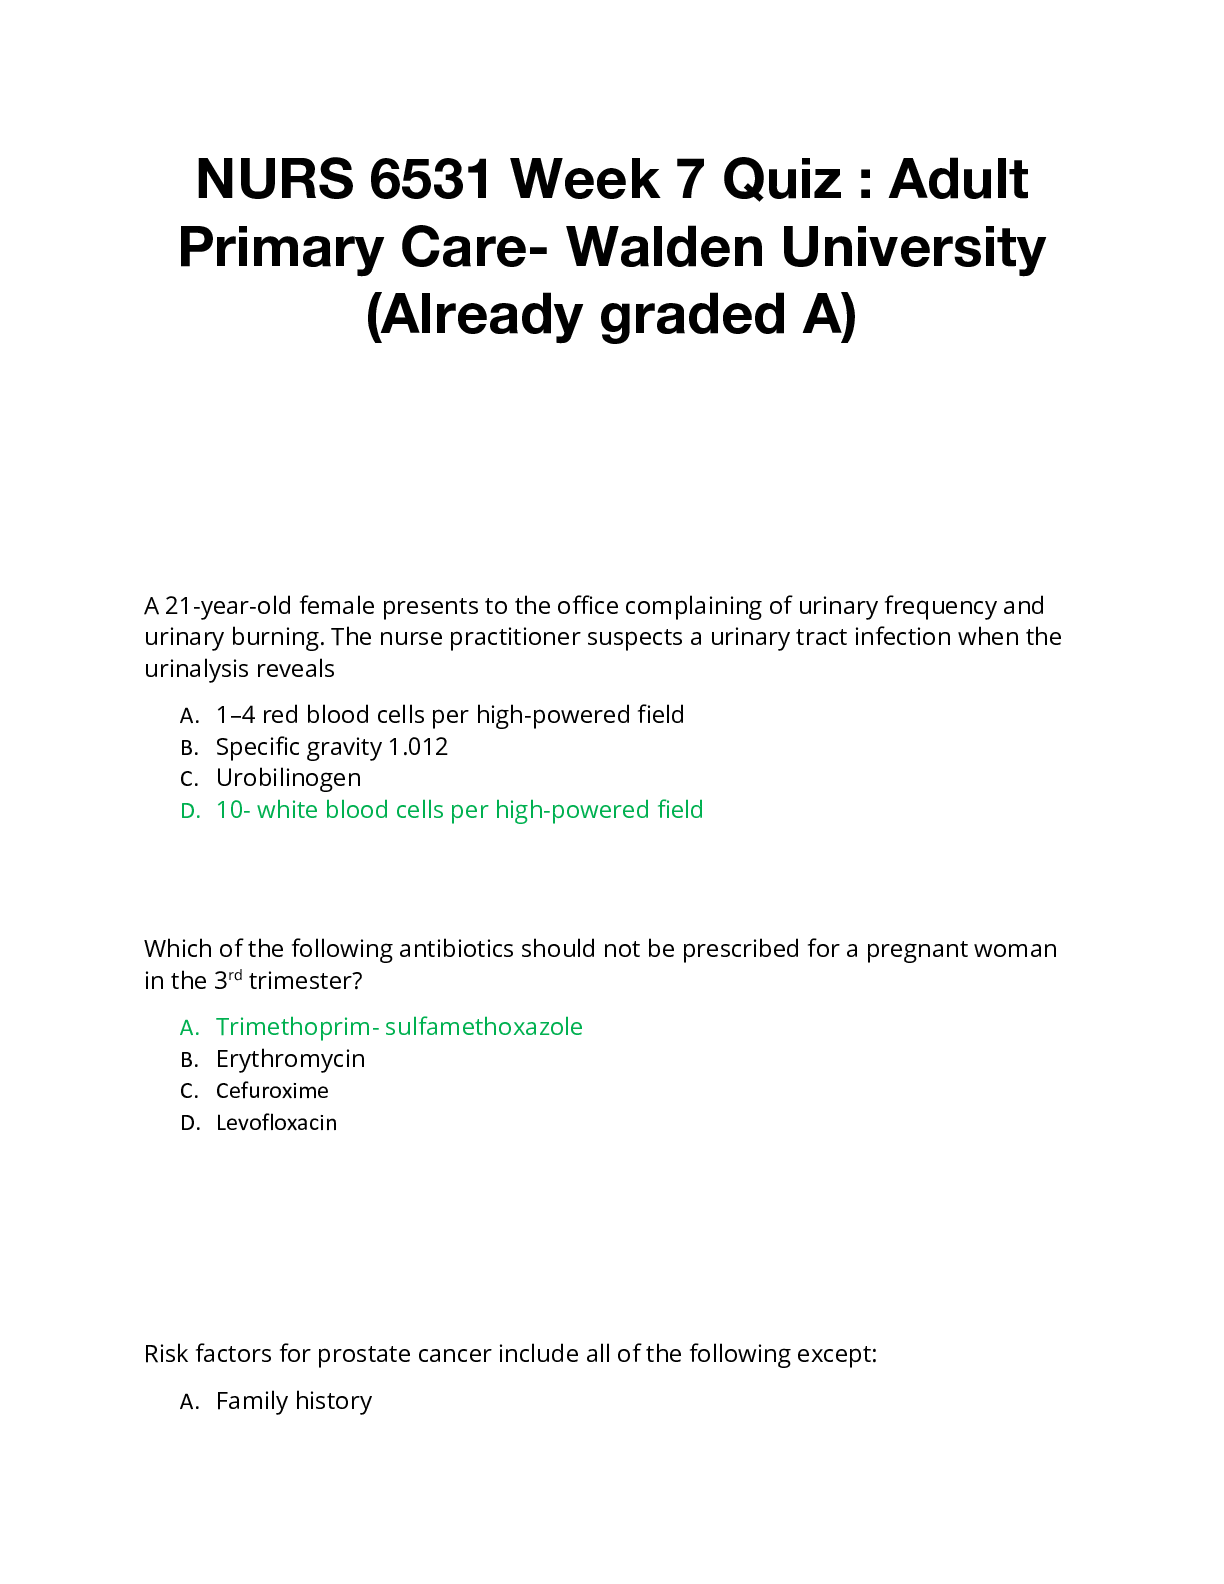 NURS 6531 Week 7 Quiz : Adult Primary Care- Walden University